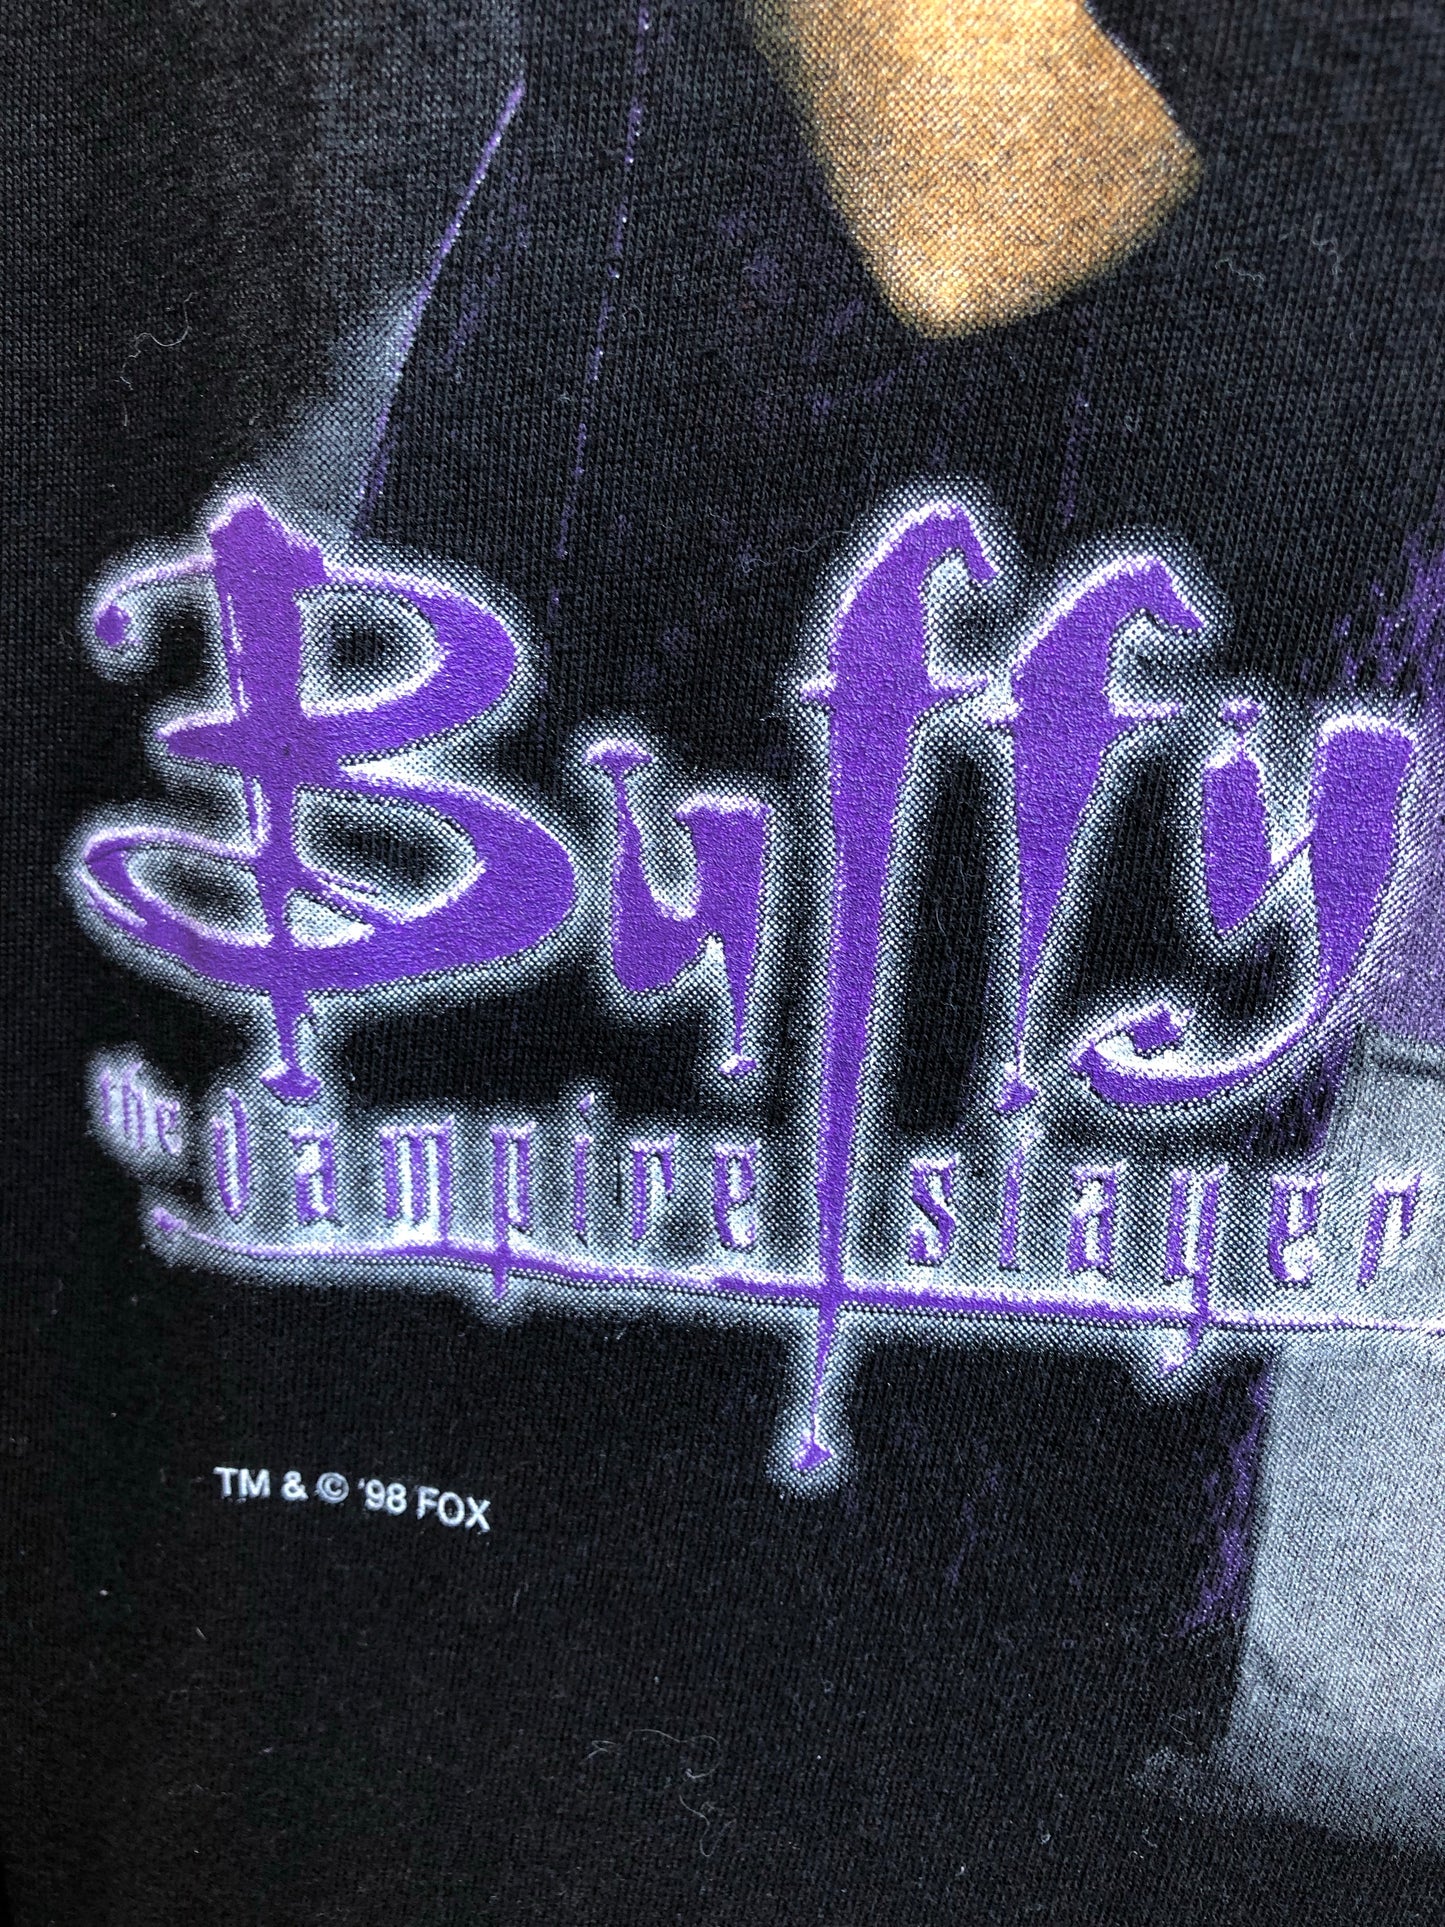 Vintage 90s Buffy the Vampire Slayer Tshirt - Spark Pretty